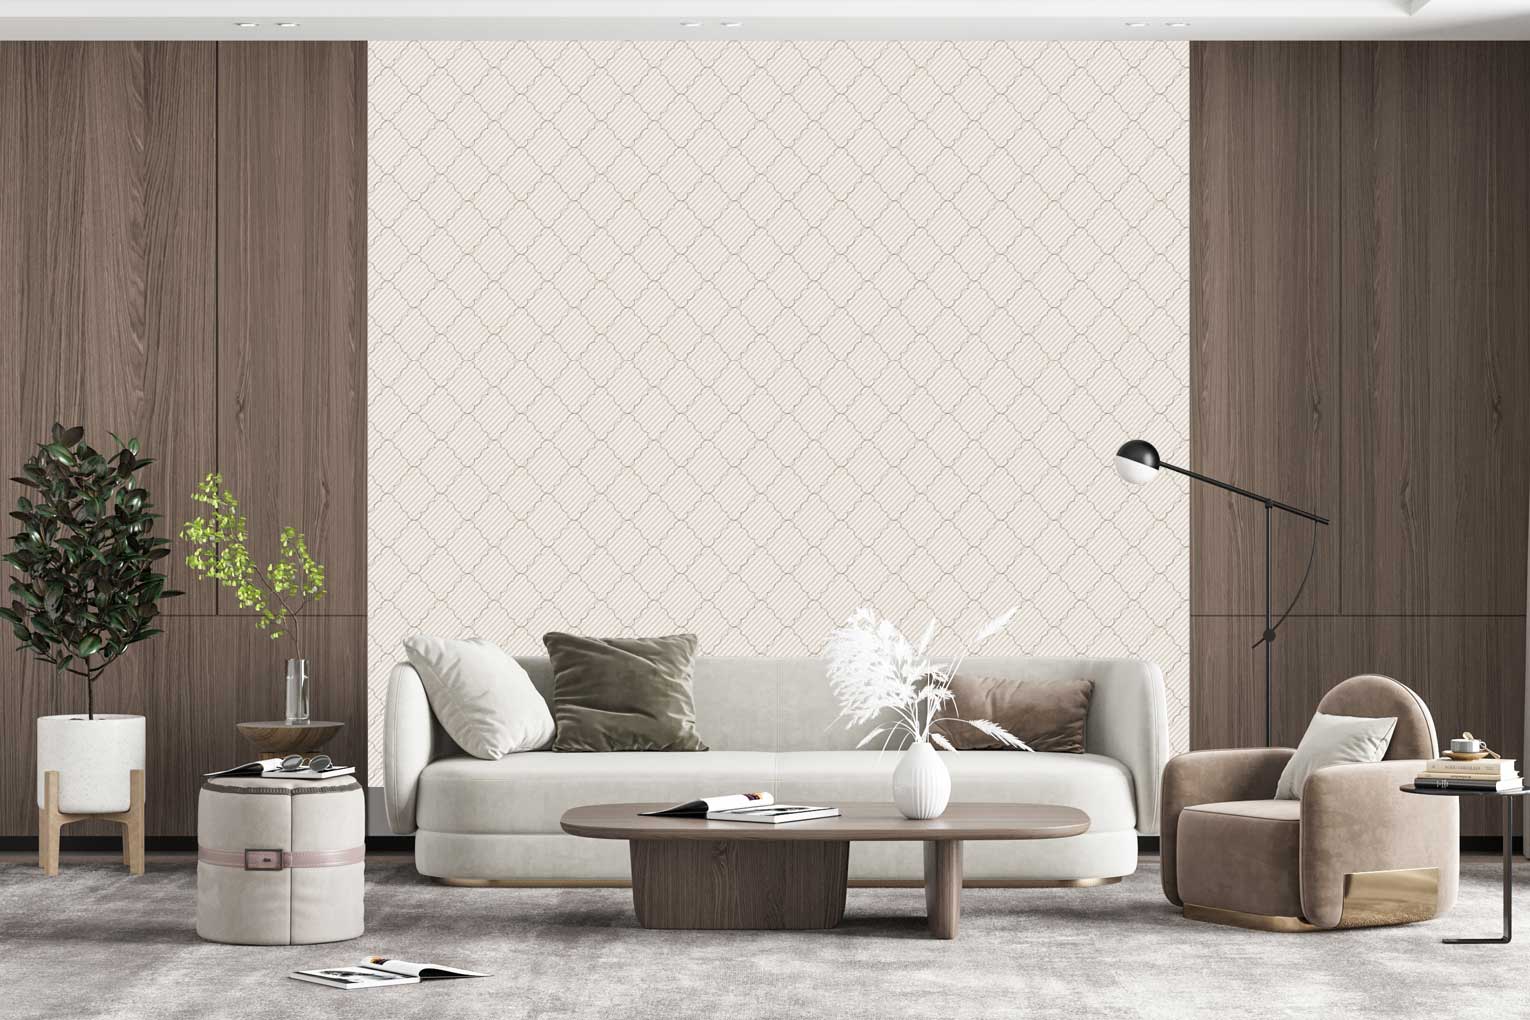 cream wallpaper design